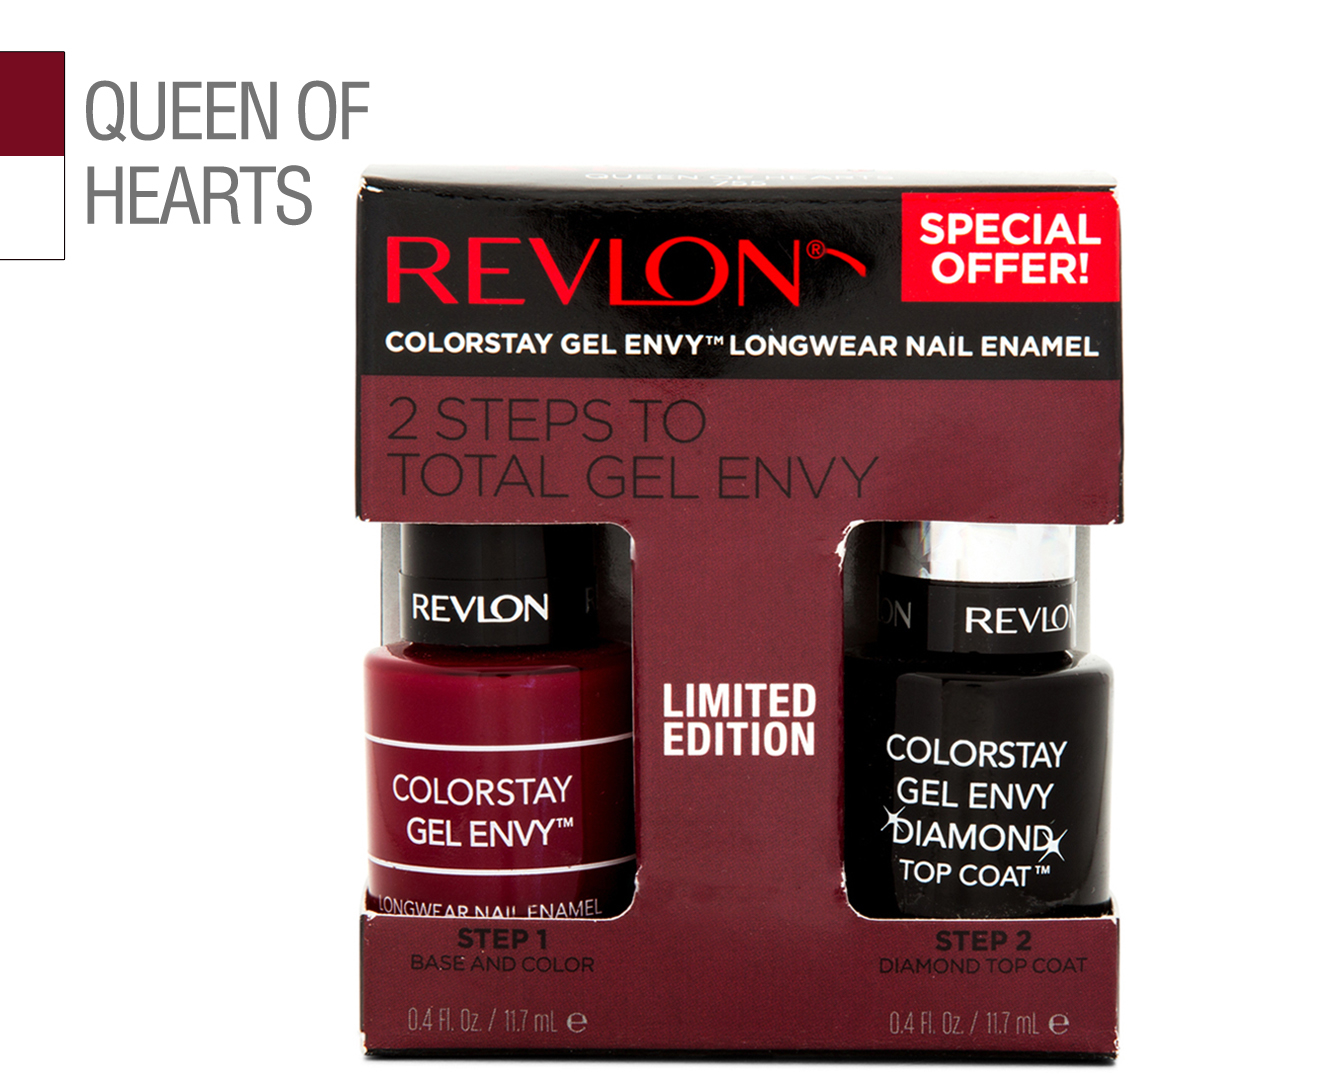 Revlon ColorStay Gel Envy in "Queen of Hearts" - wide 4